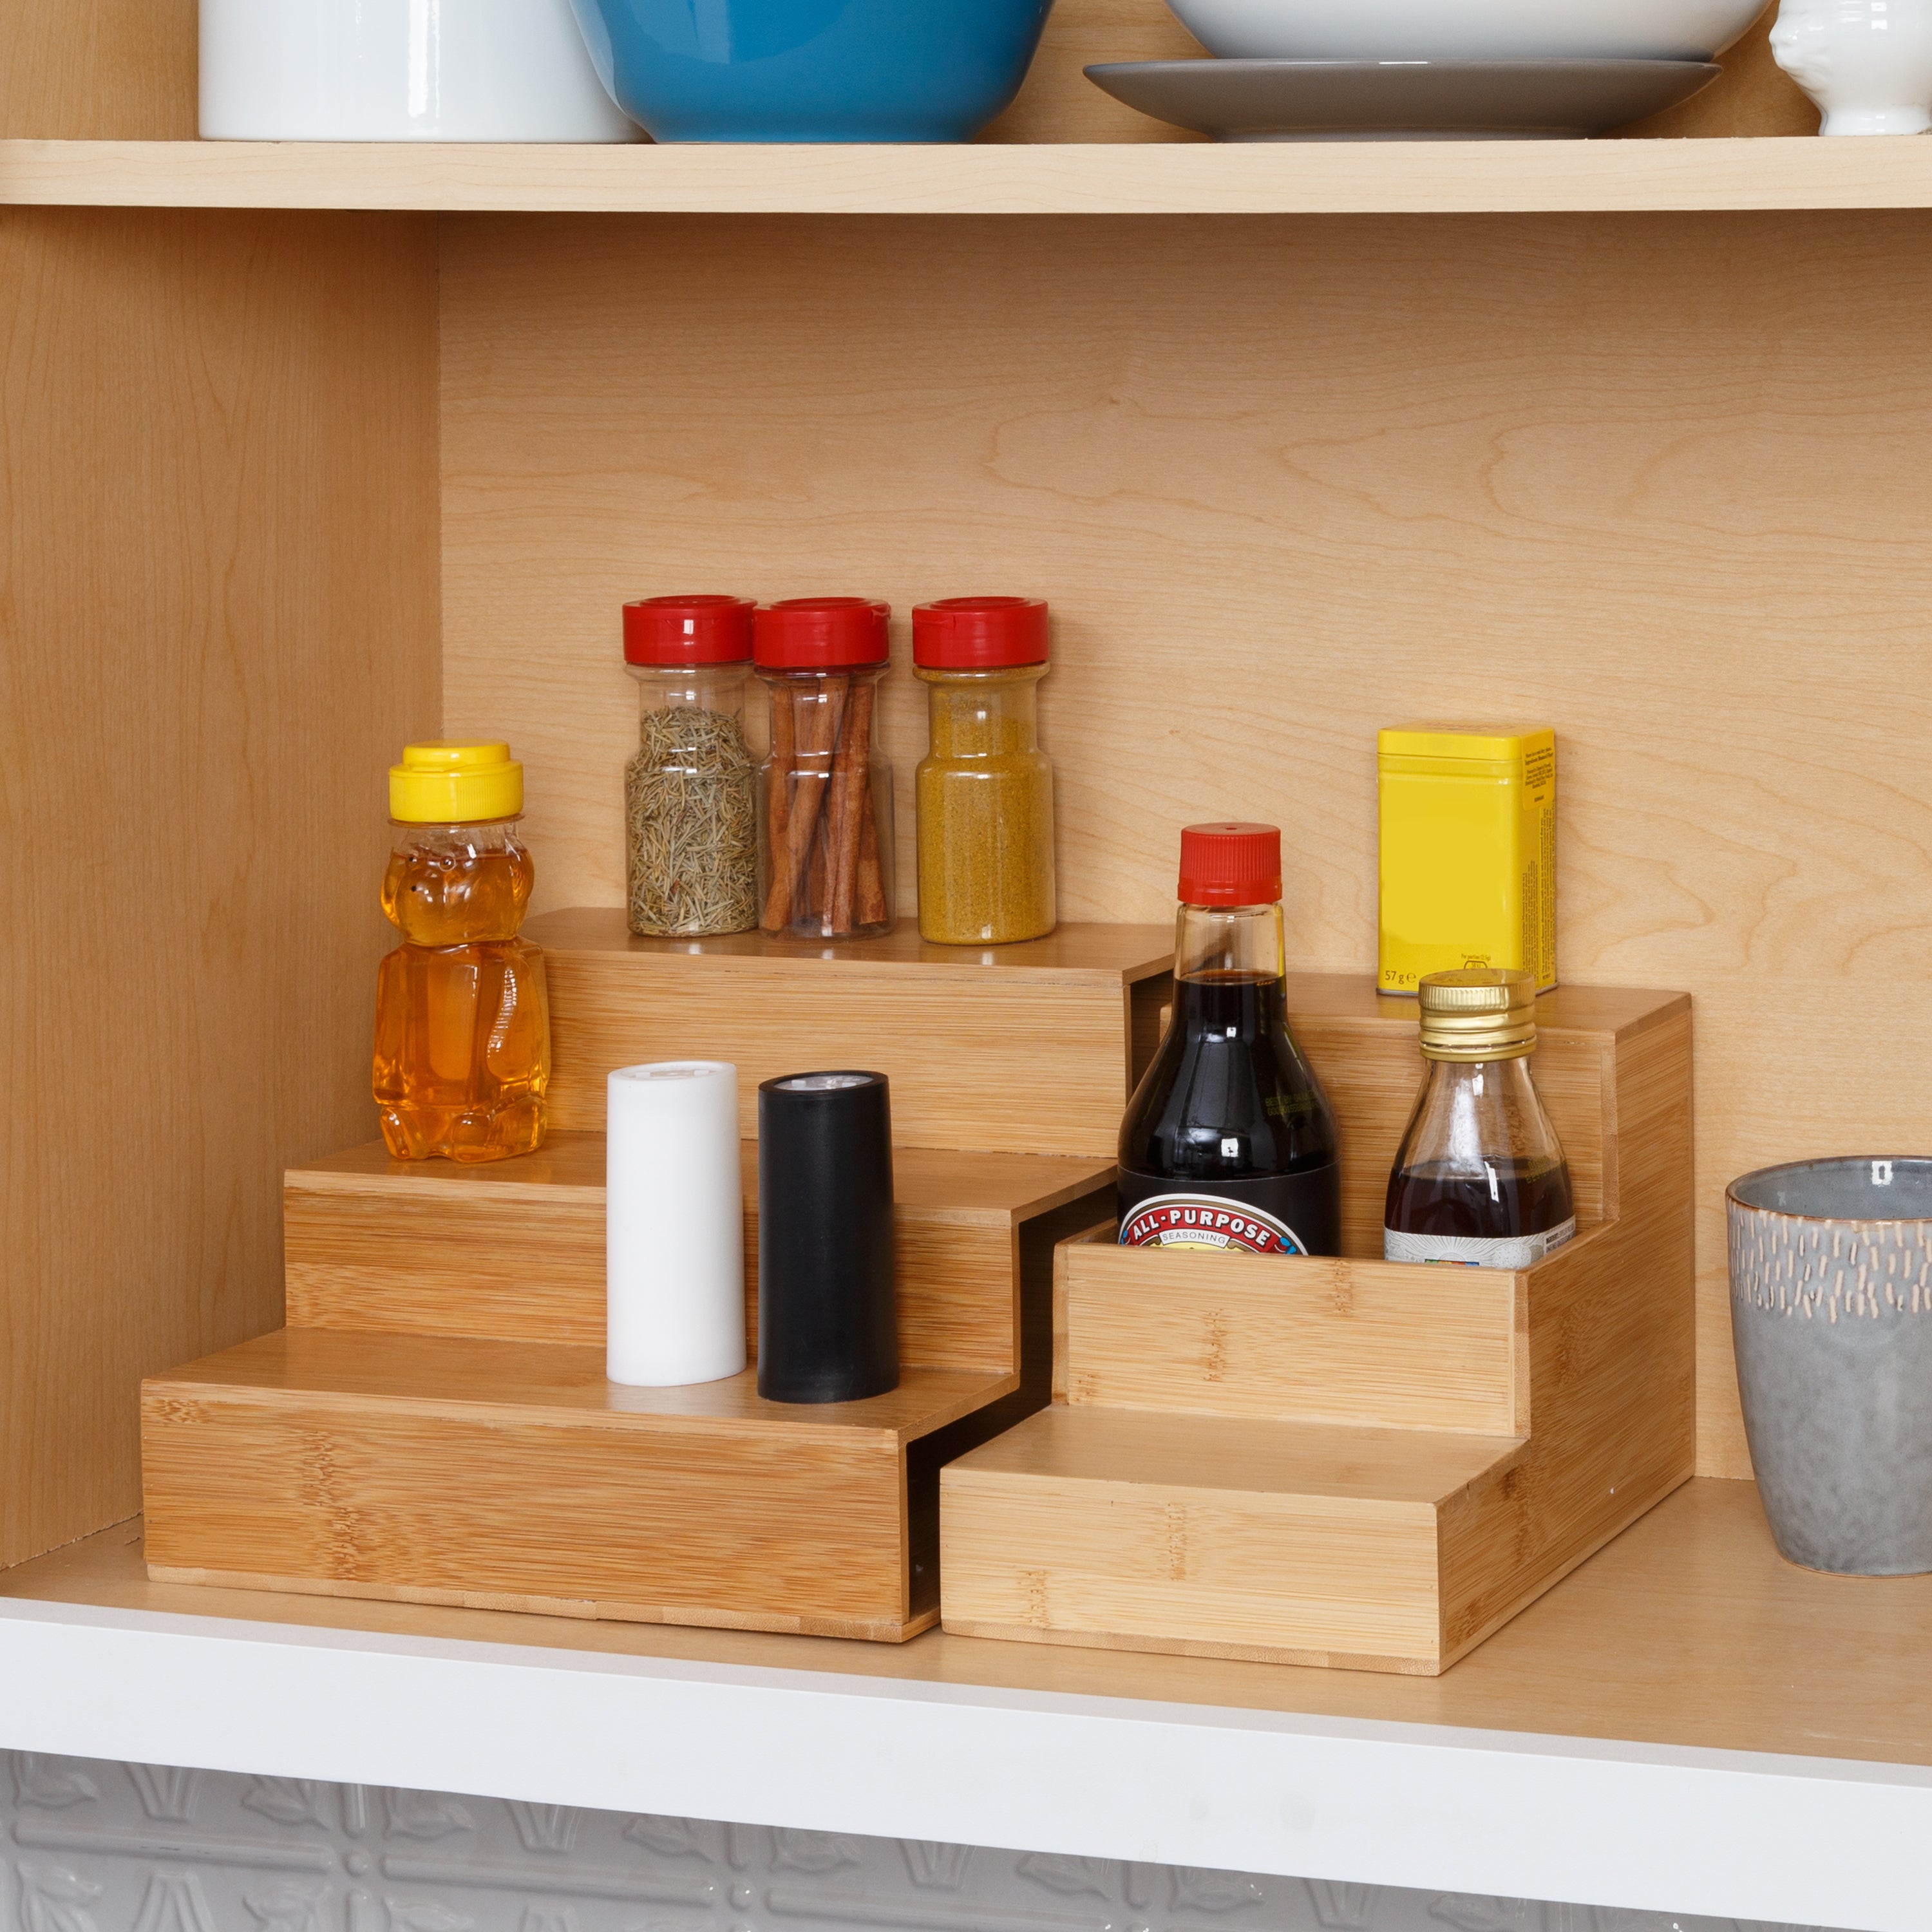 NEX 2-Tier Spice Rack Countertop Shelf for Kitchen Spice Jars